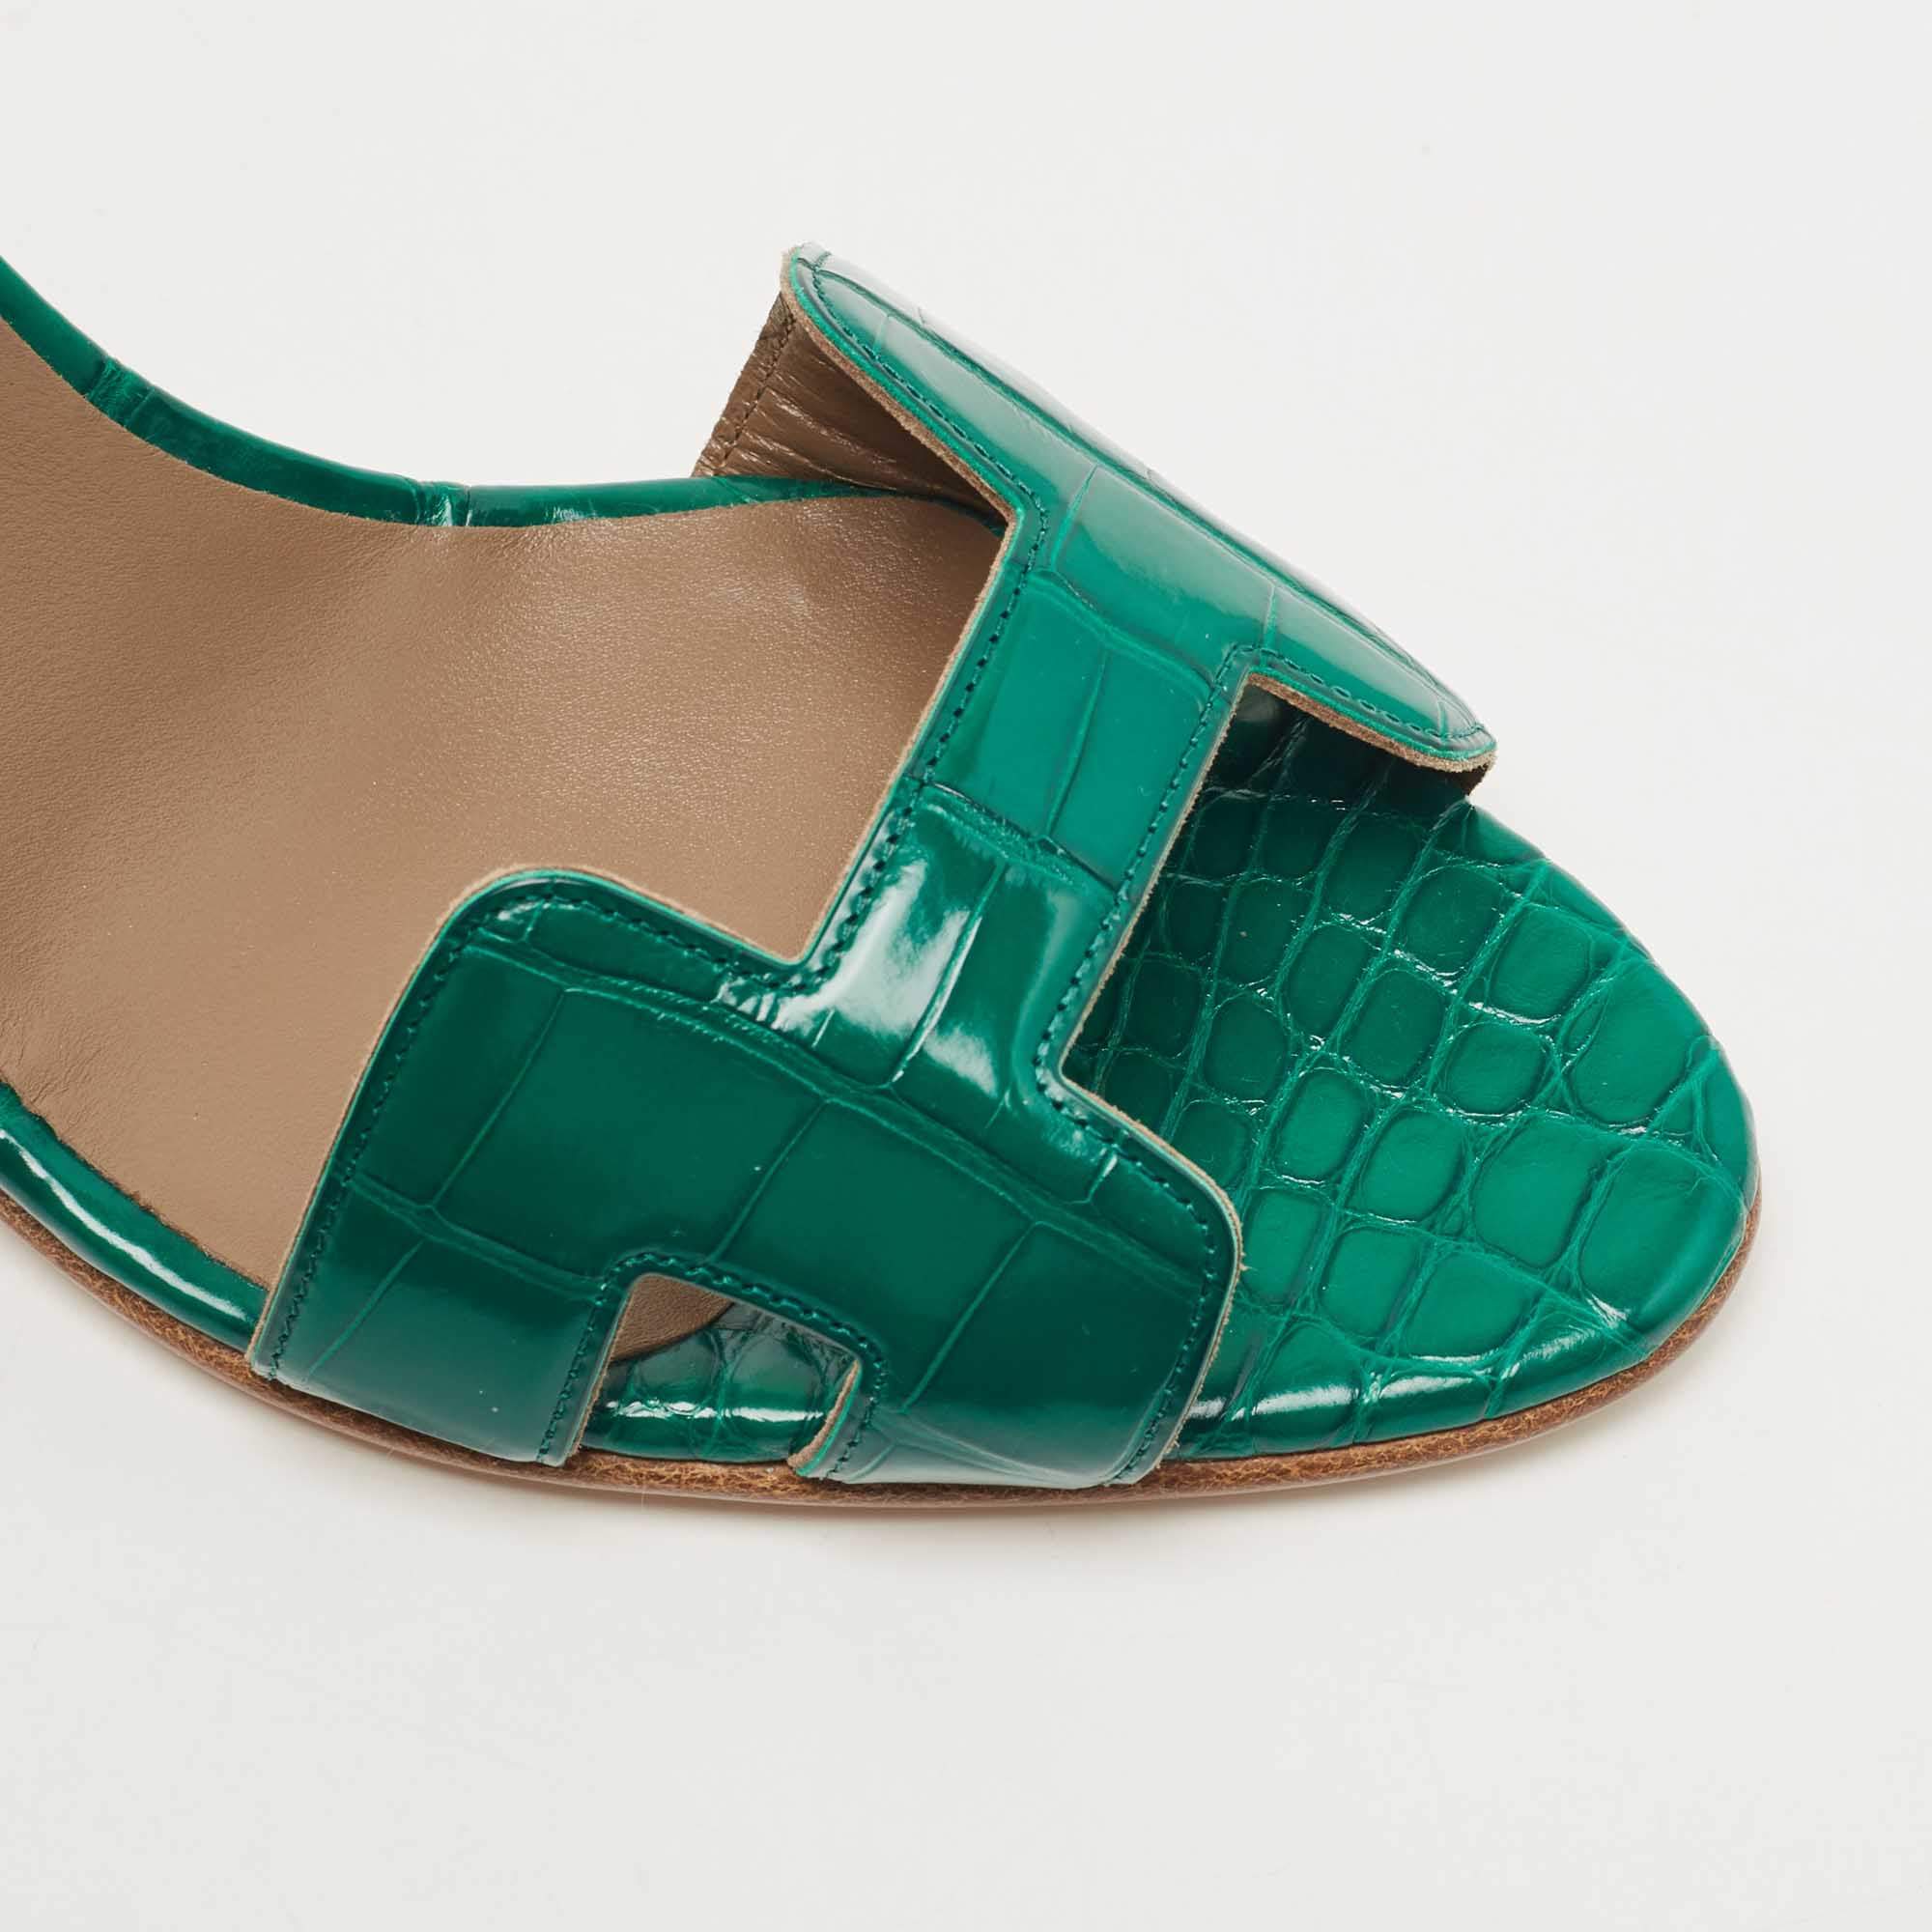 Hermes Green Croc Leather Premiere Ankle Strap Sandals Size 38 Hermes